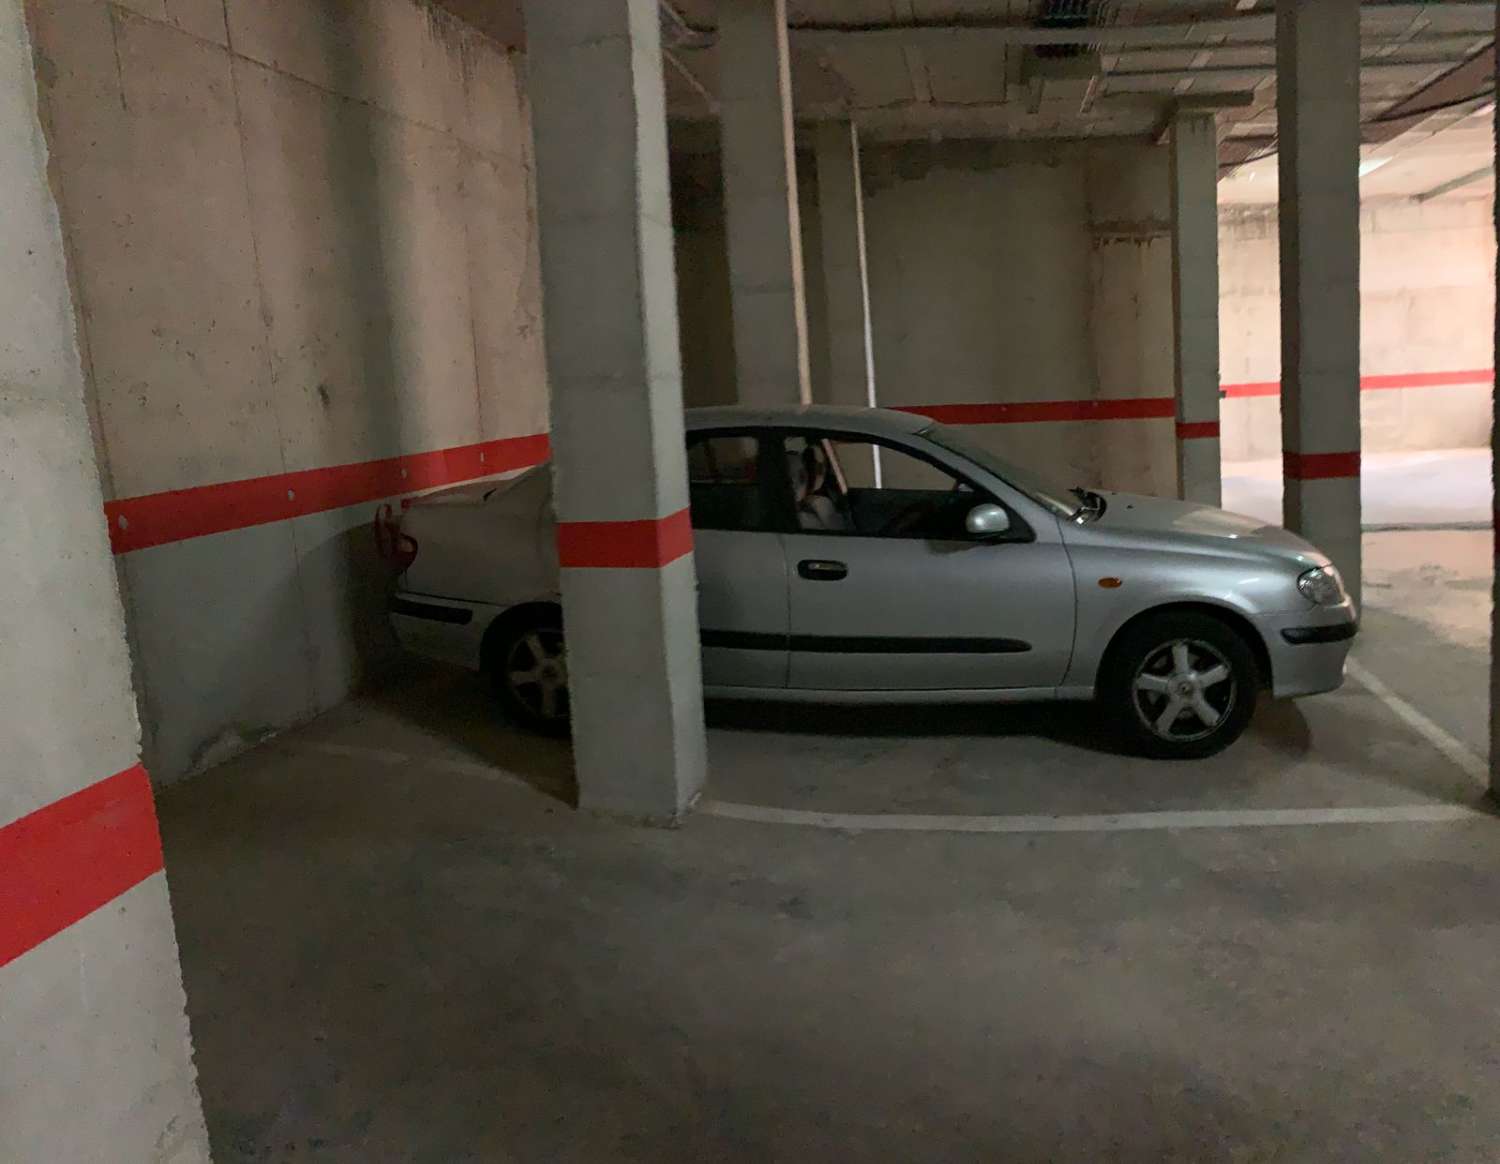 Underjordisk parkeringsplats